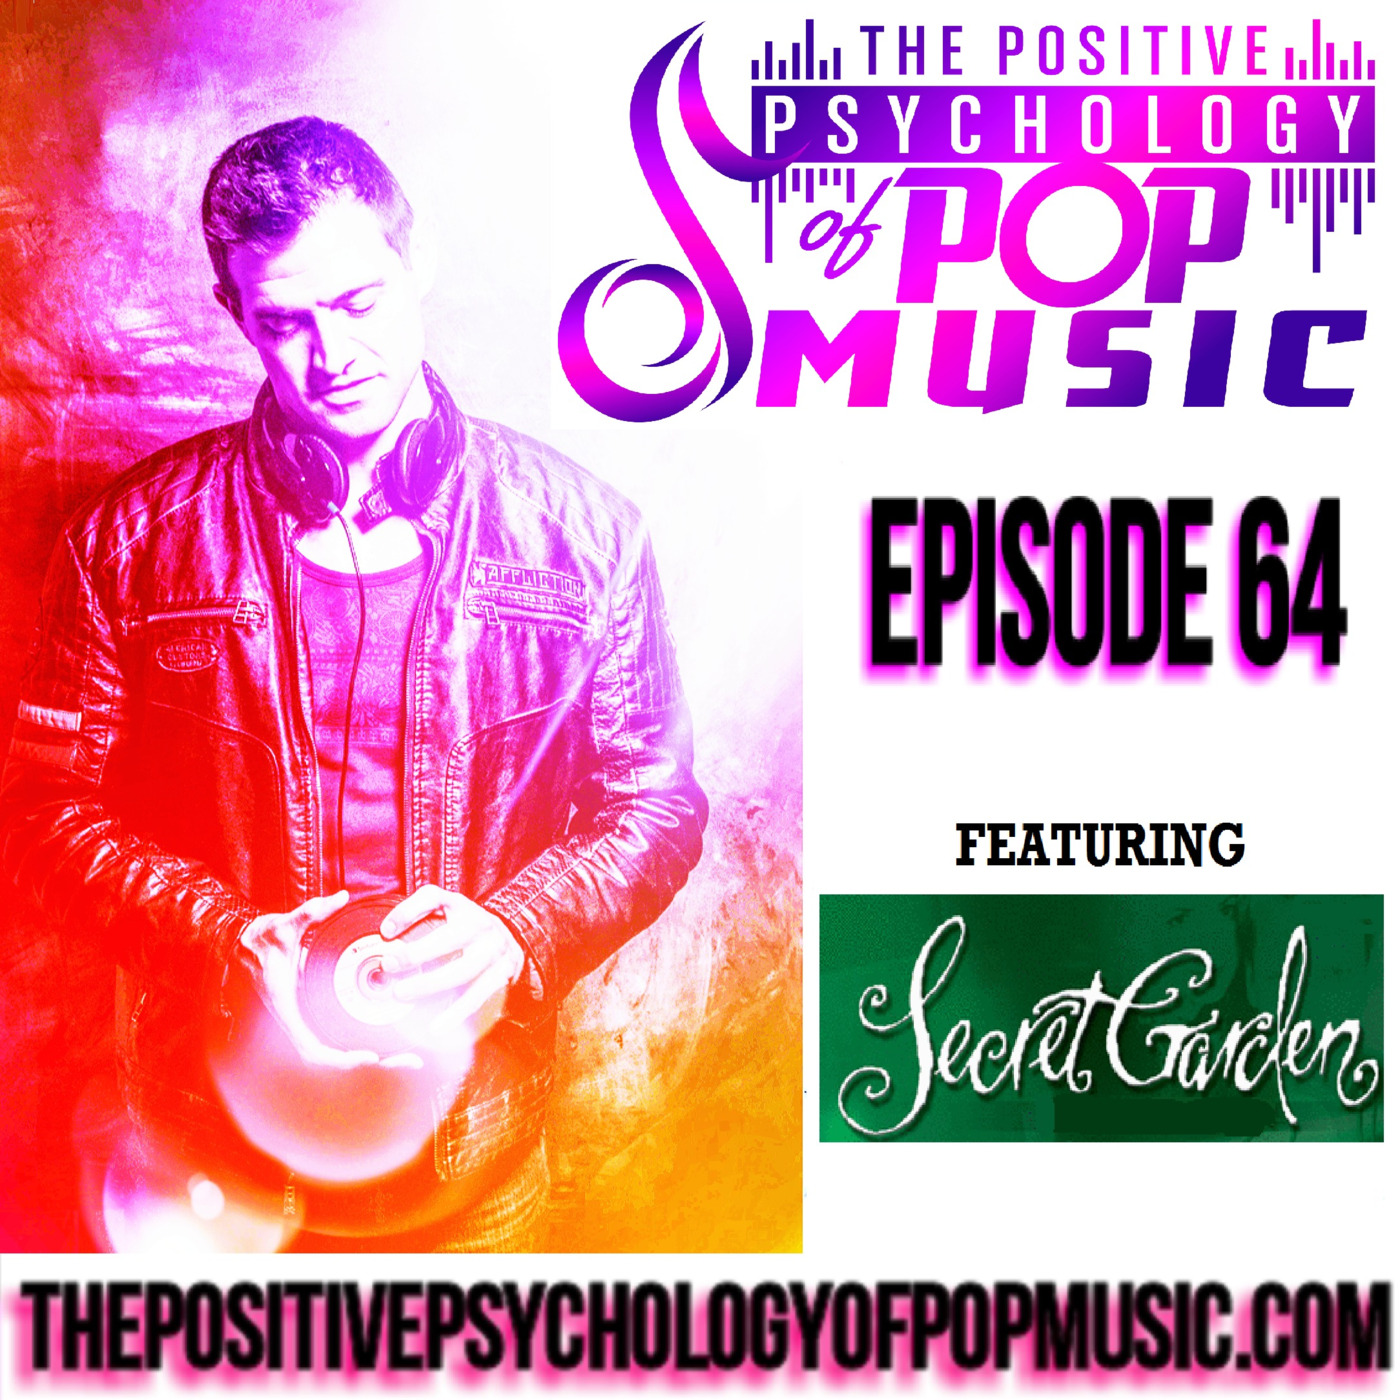 Secret Garden on The Positive Psychology of Pop Music! - Episode 64